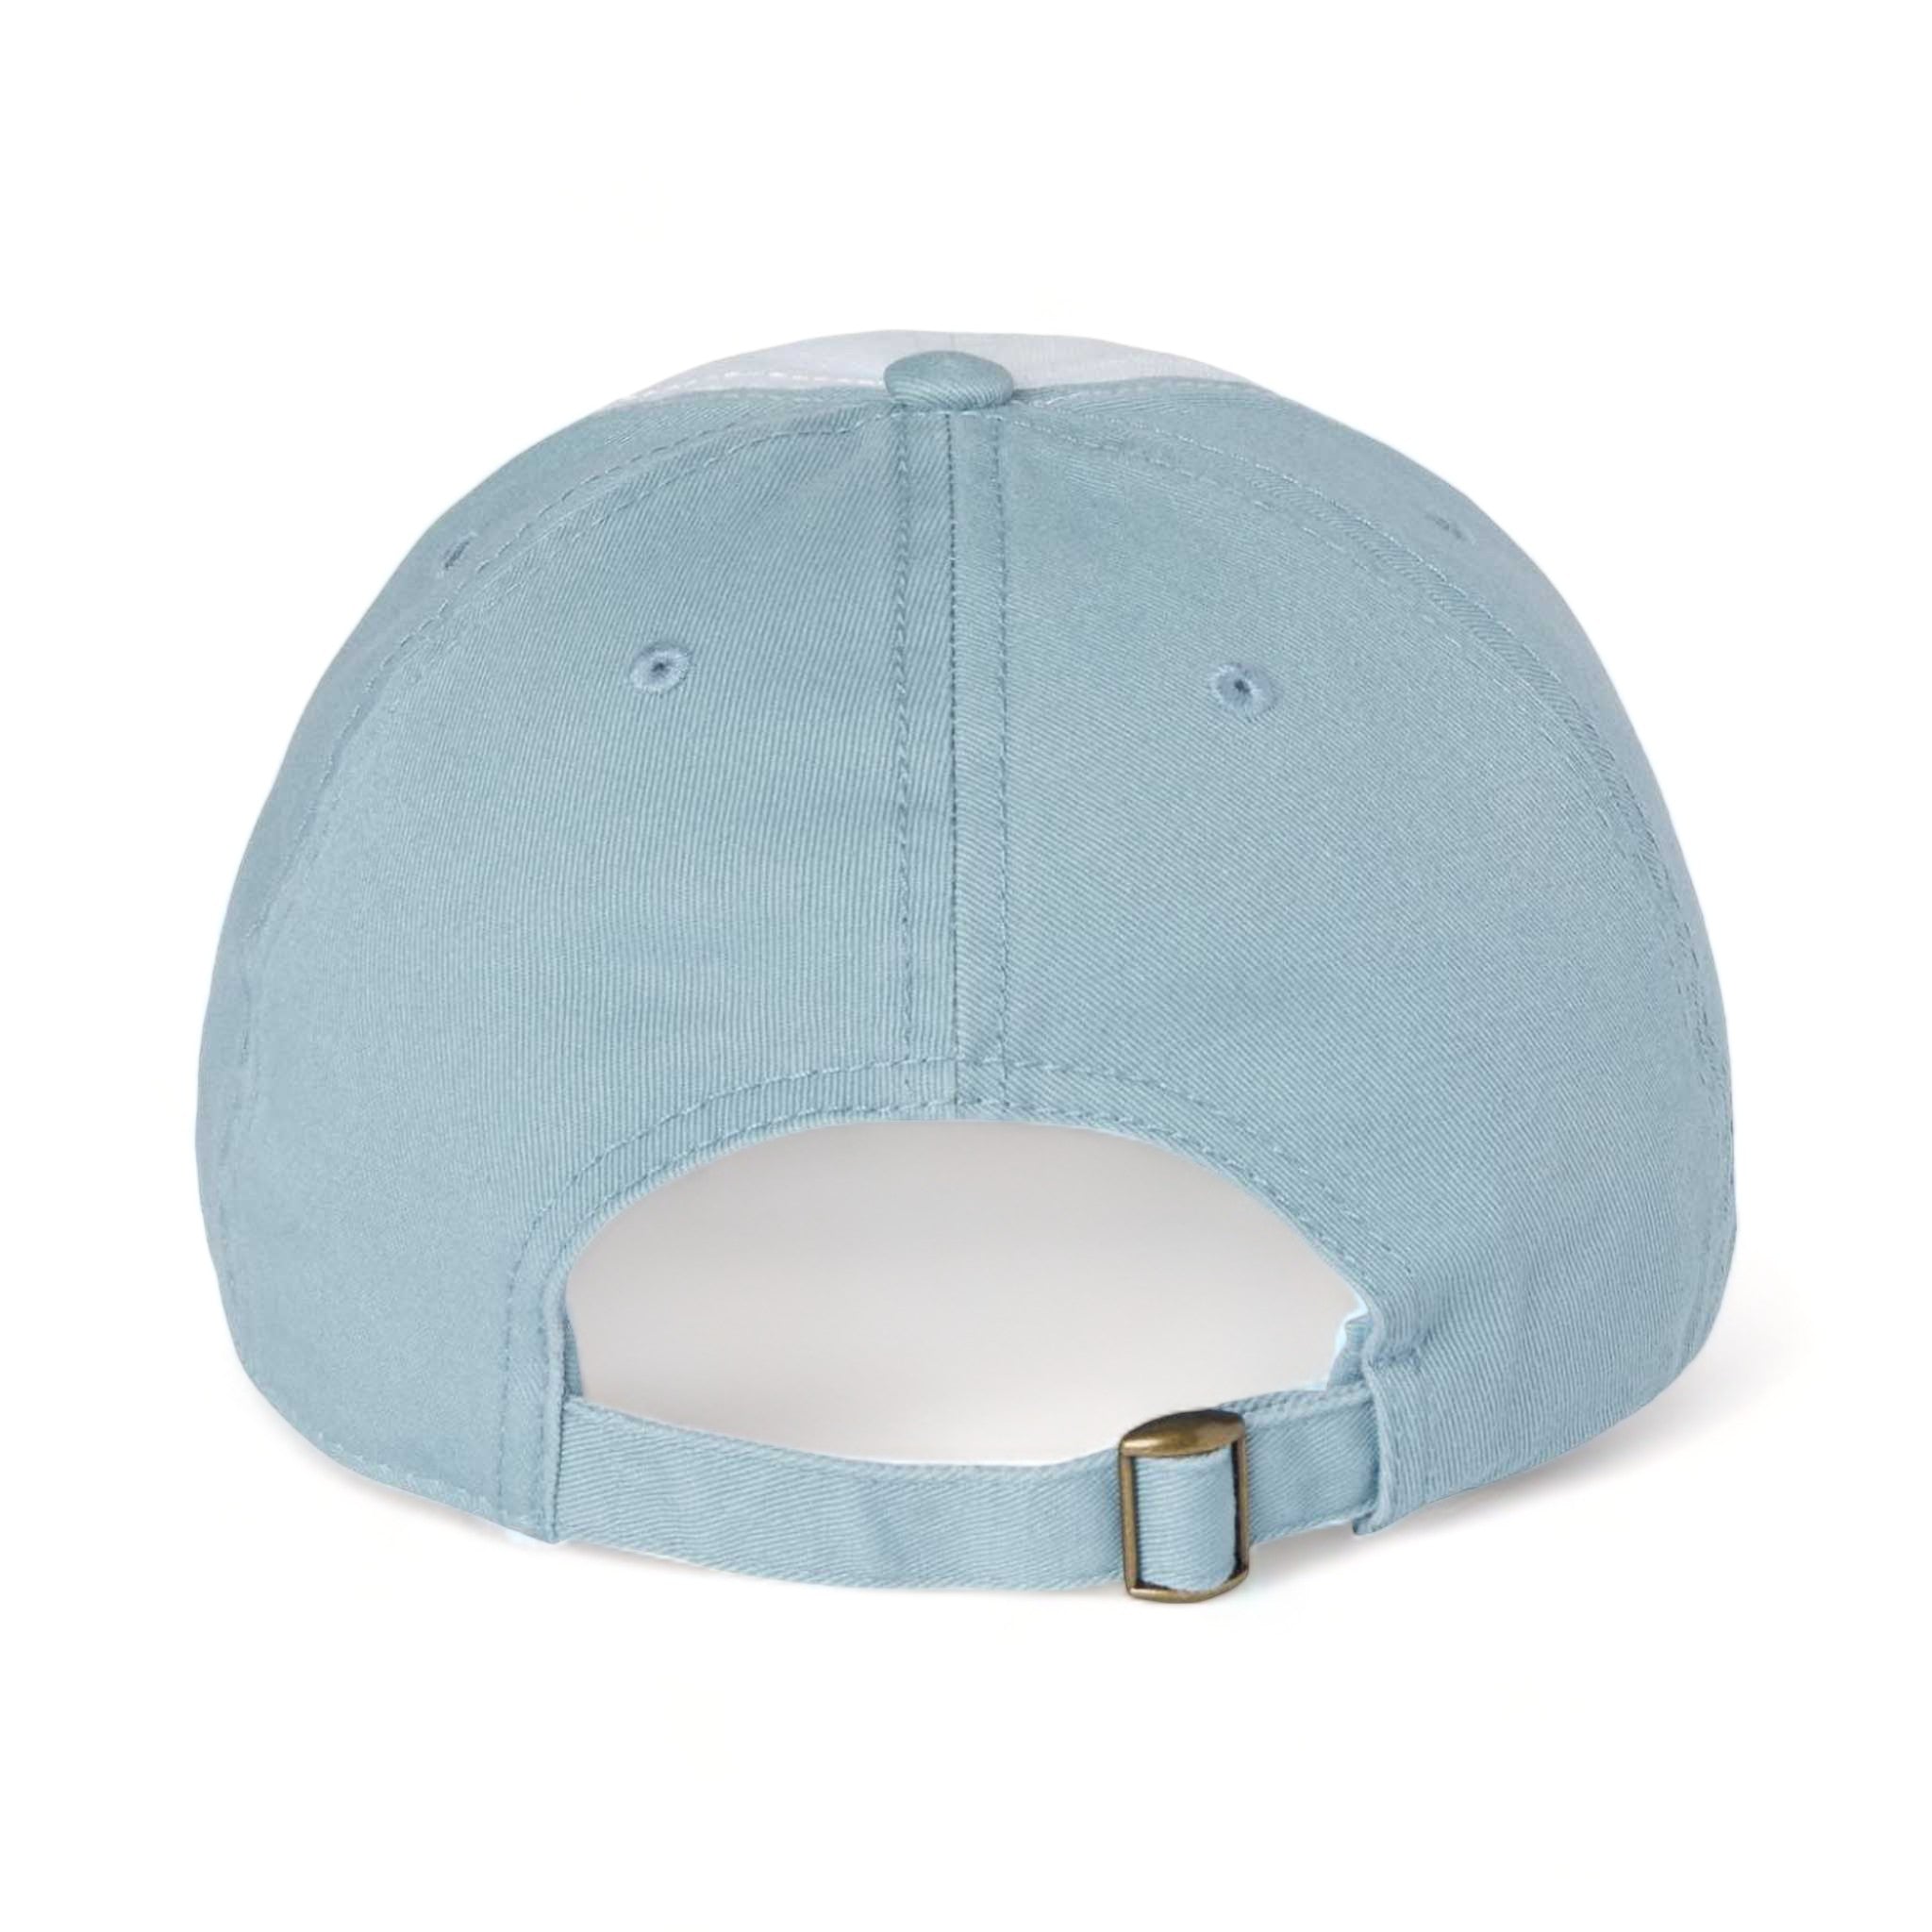 Back view of CAP AMERICA i1002 custom hat in white and smoke blue